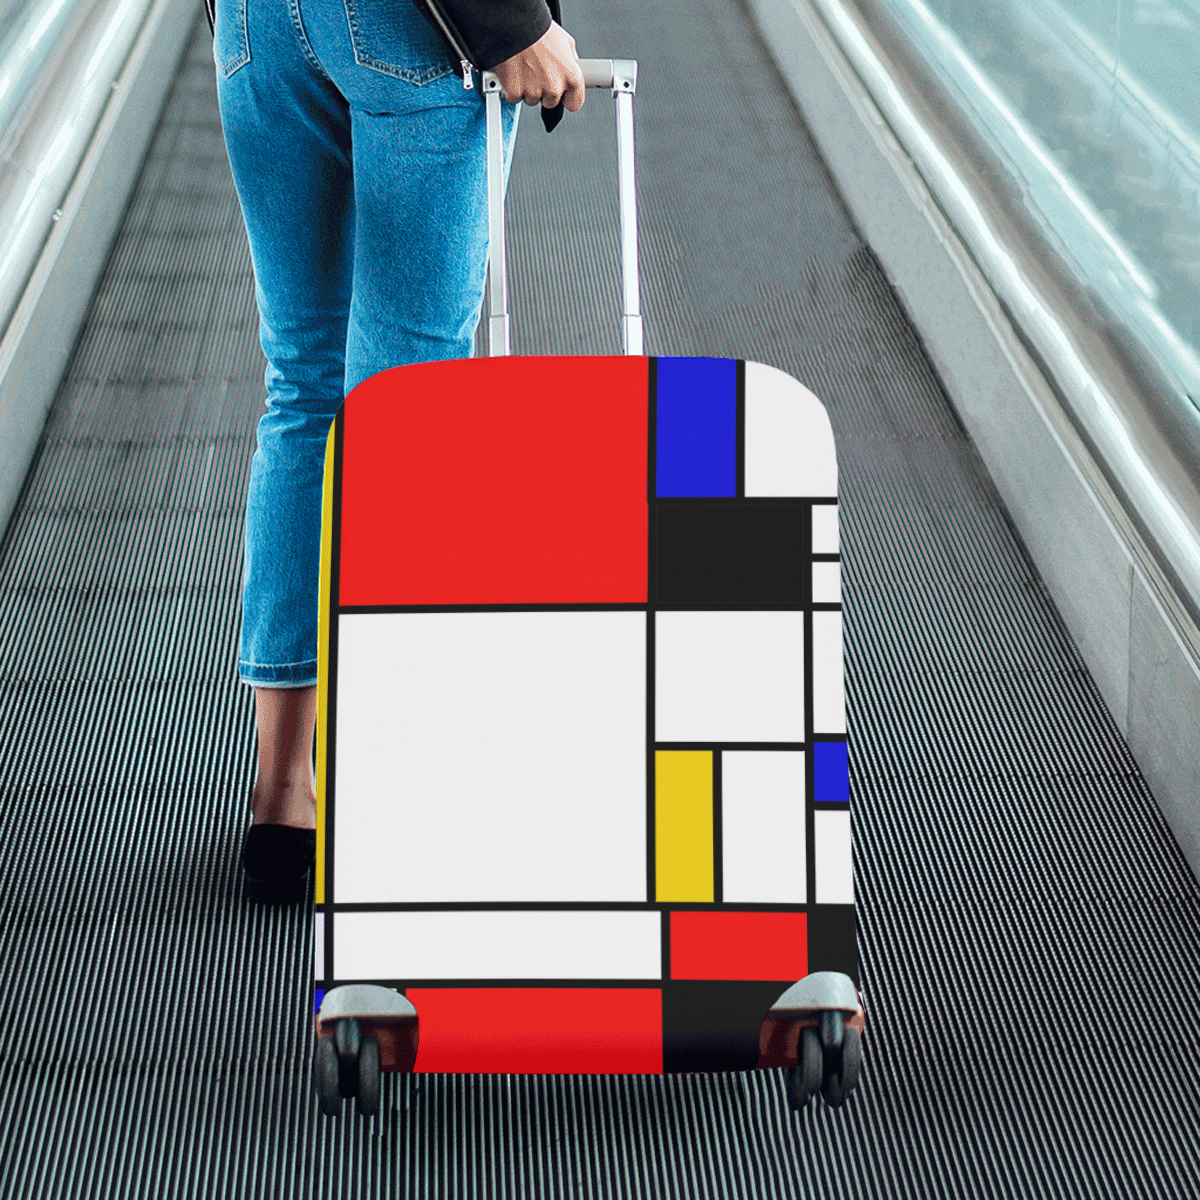 Bauhouse Composition Mondrian Style Luggage Cover/Medium 22"-25"